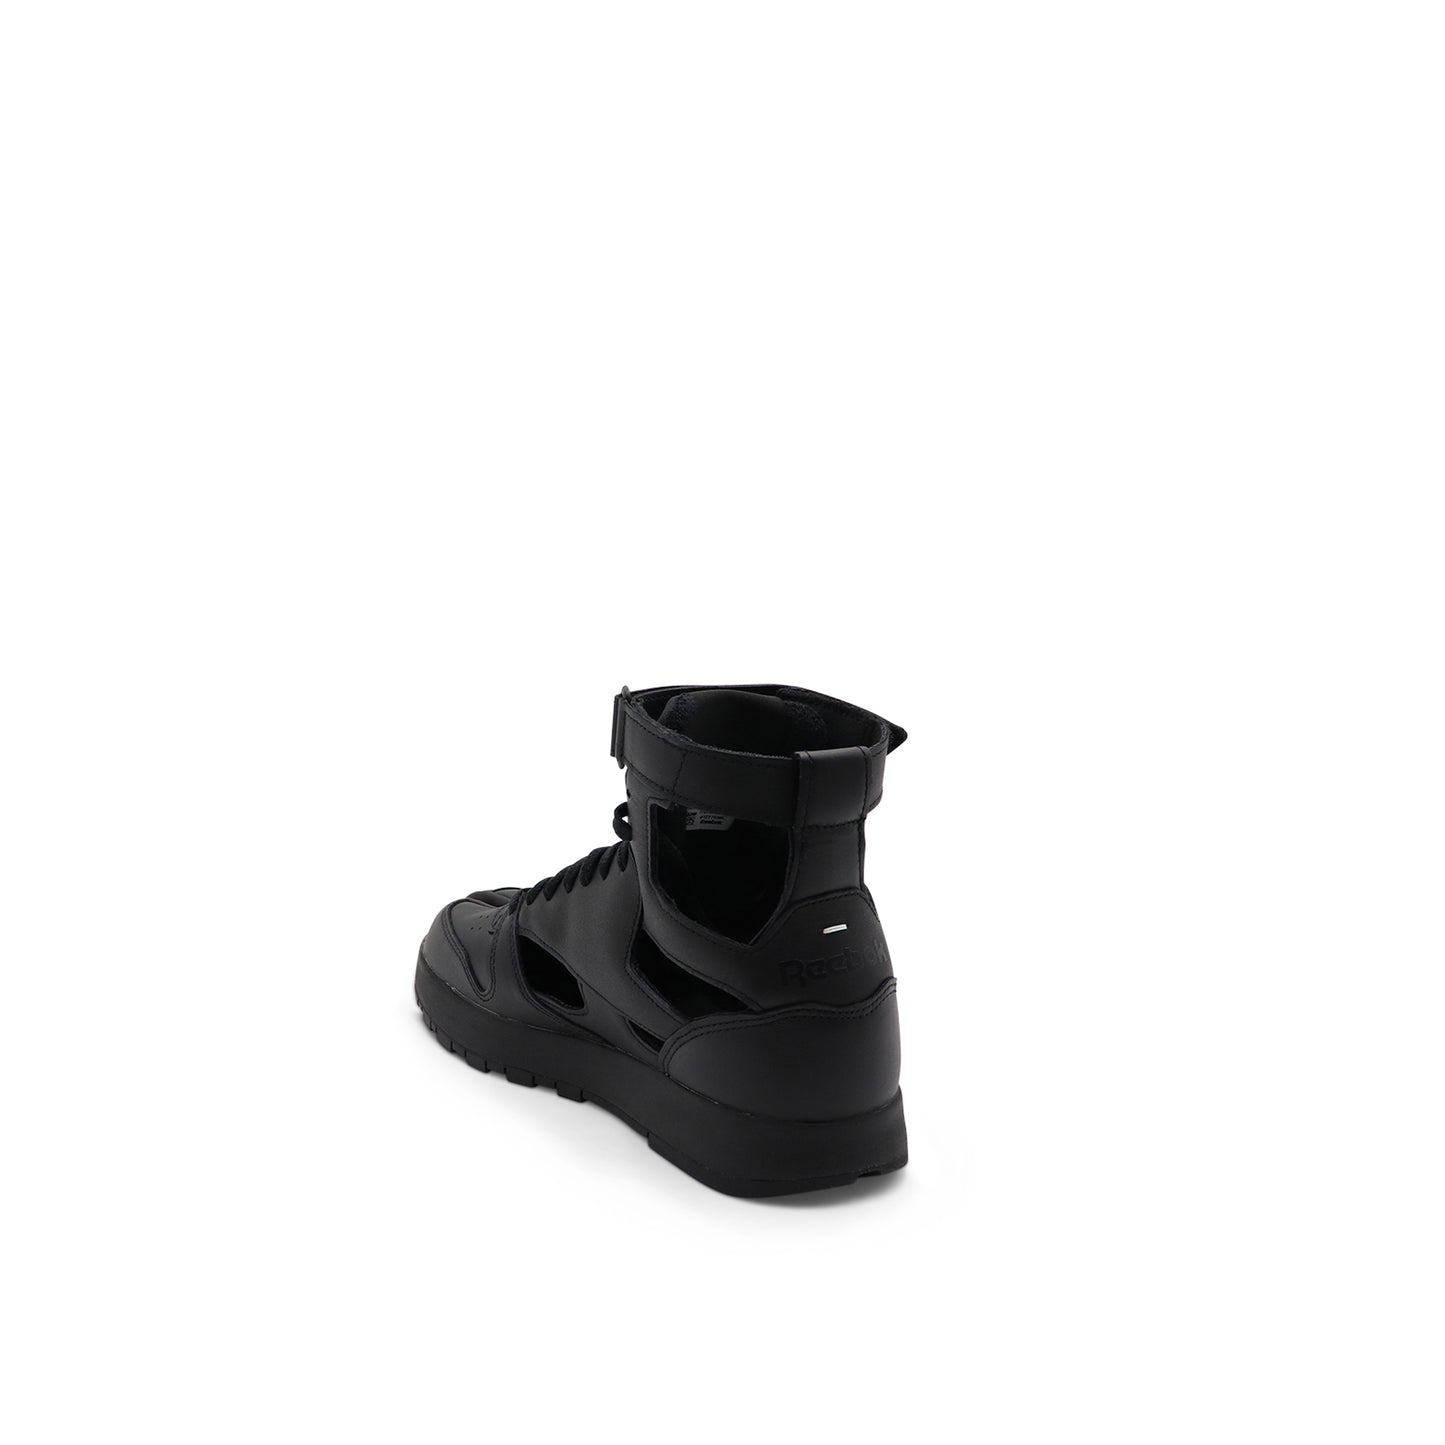 Maison Margiela x Reebok Tabi Gladiator High Sneaker in Black